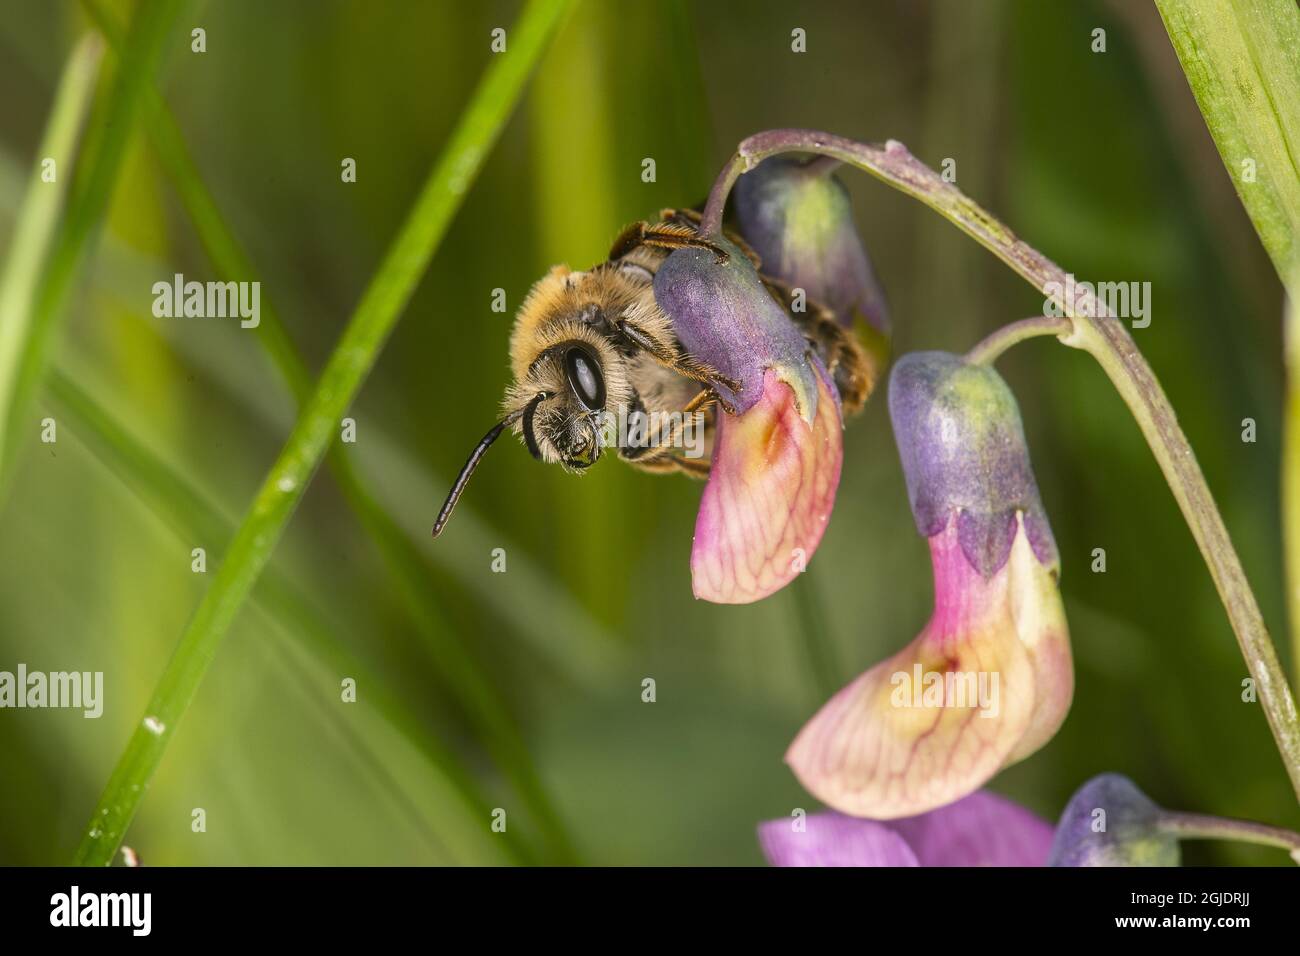 Burbage mining bee (Andrena lathyri) on (Lathyrus linifolius) Photo: Ola Jennersten / TT / code2754  Stock Photo